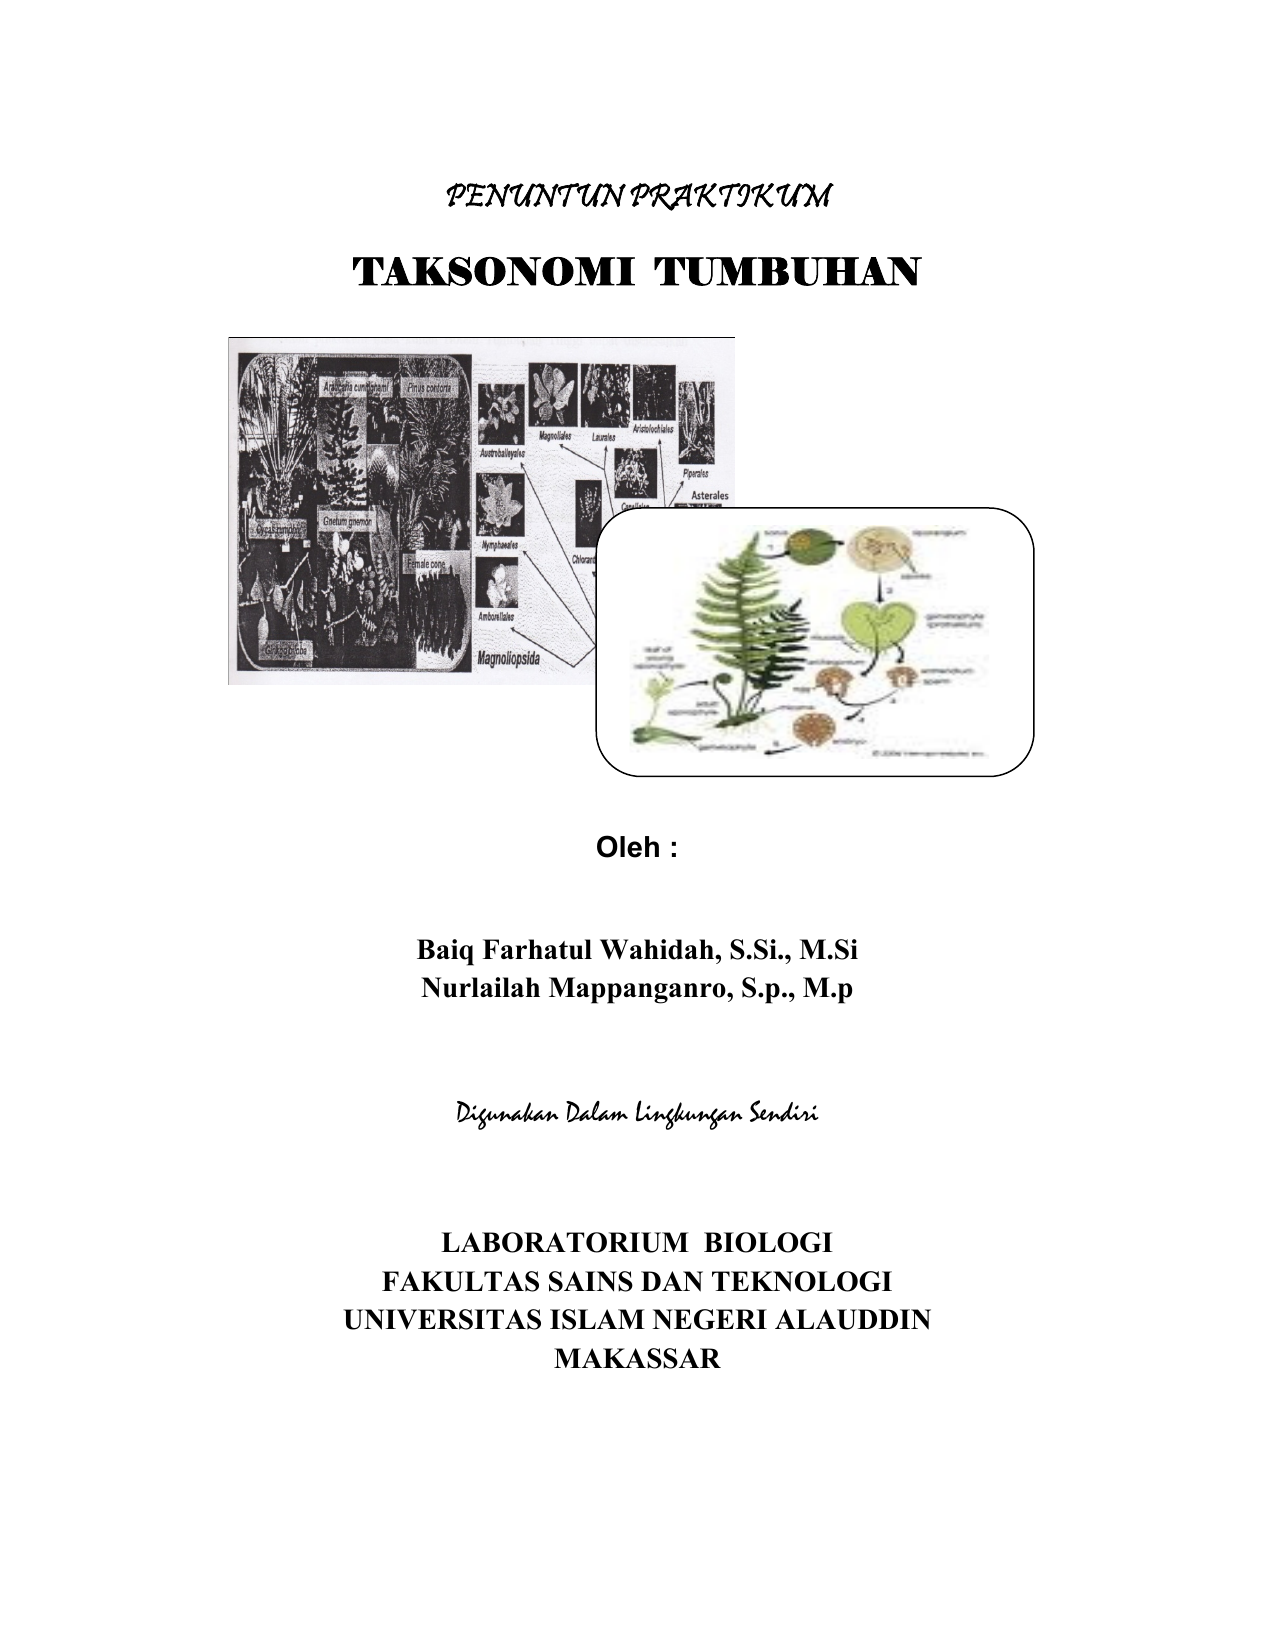  taksonomi  tumbuhan  Biologi UIN Alauddin Makassar